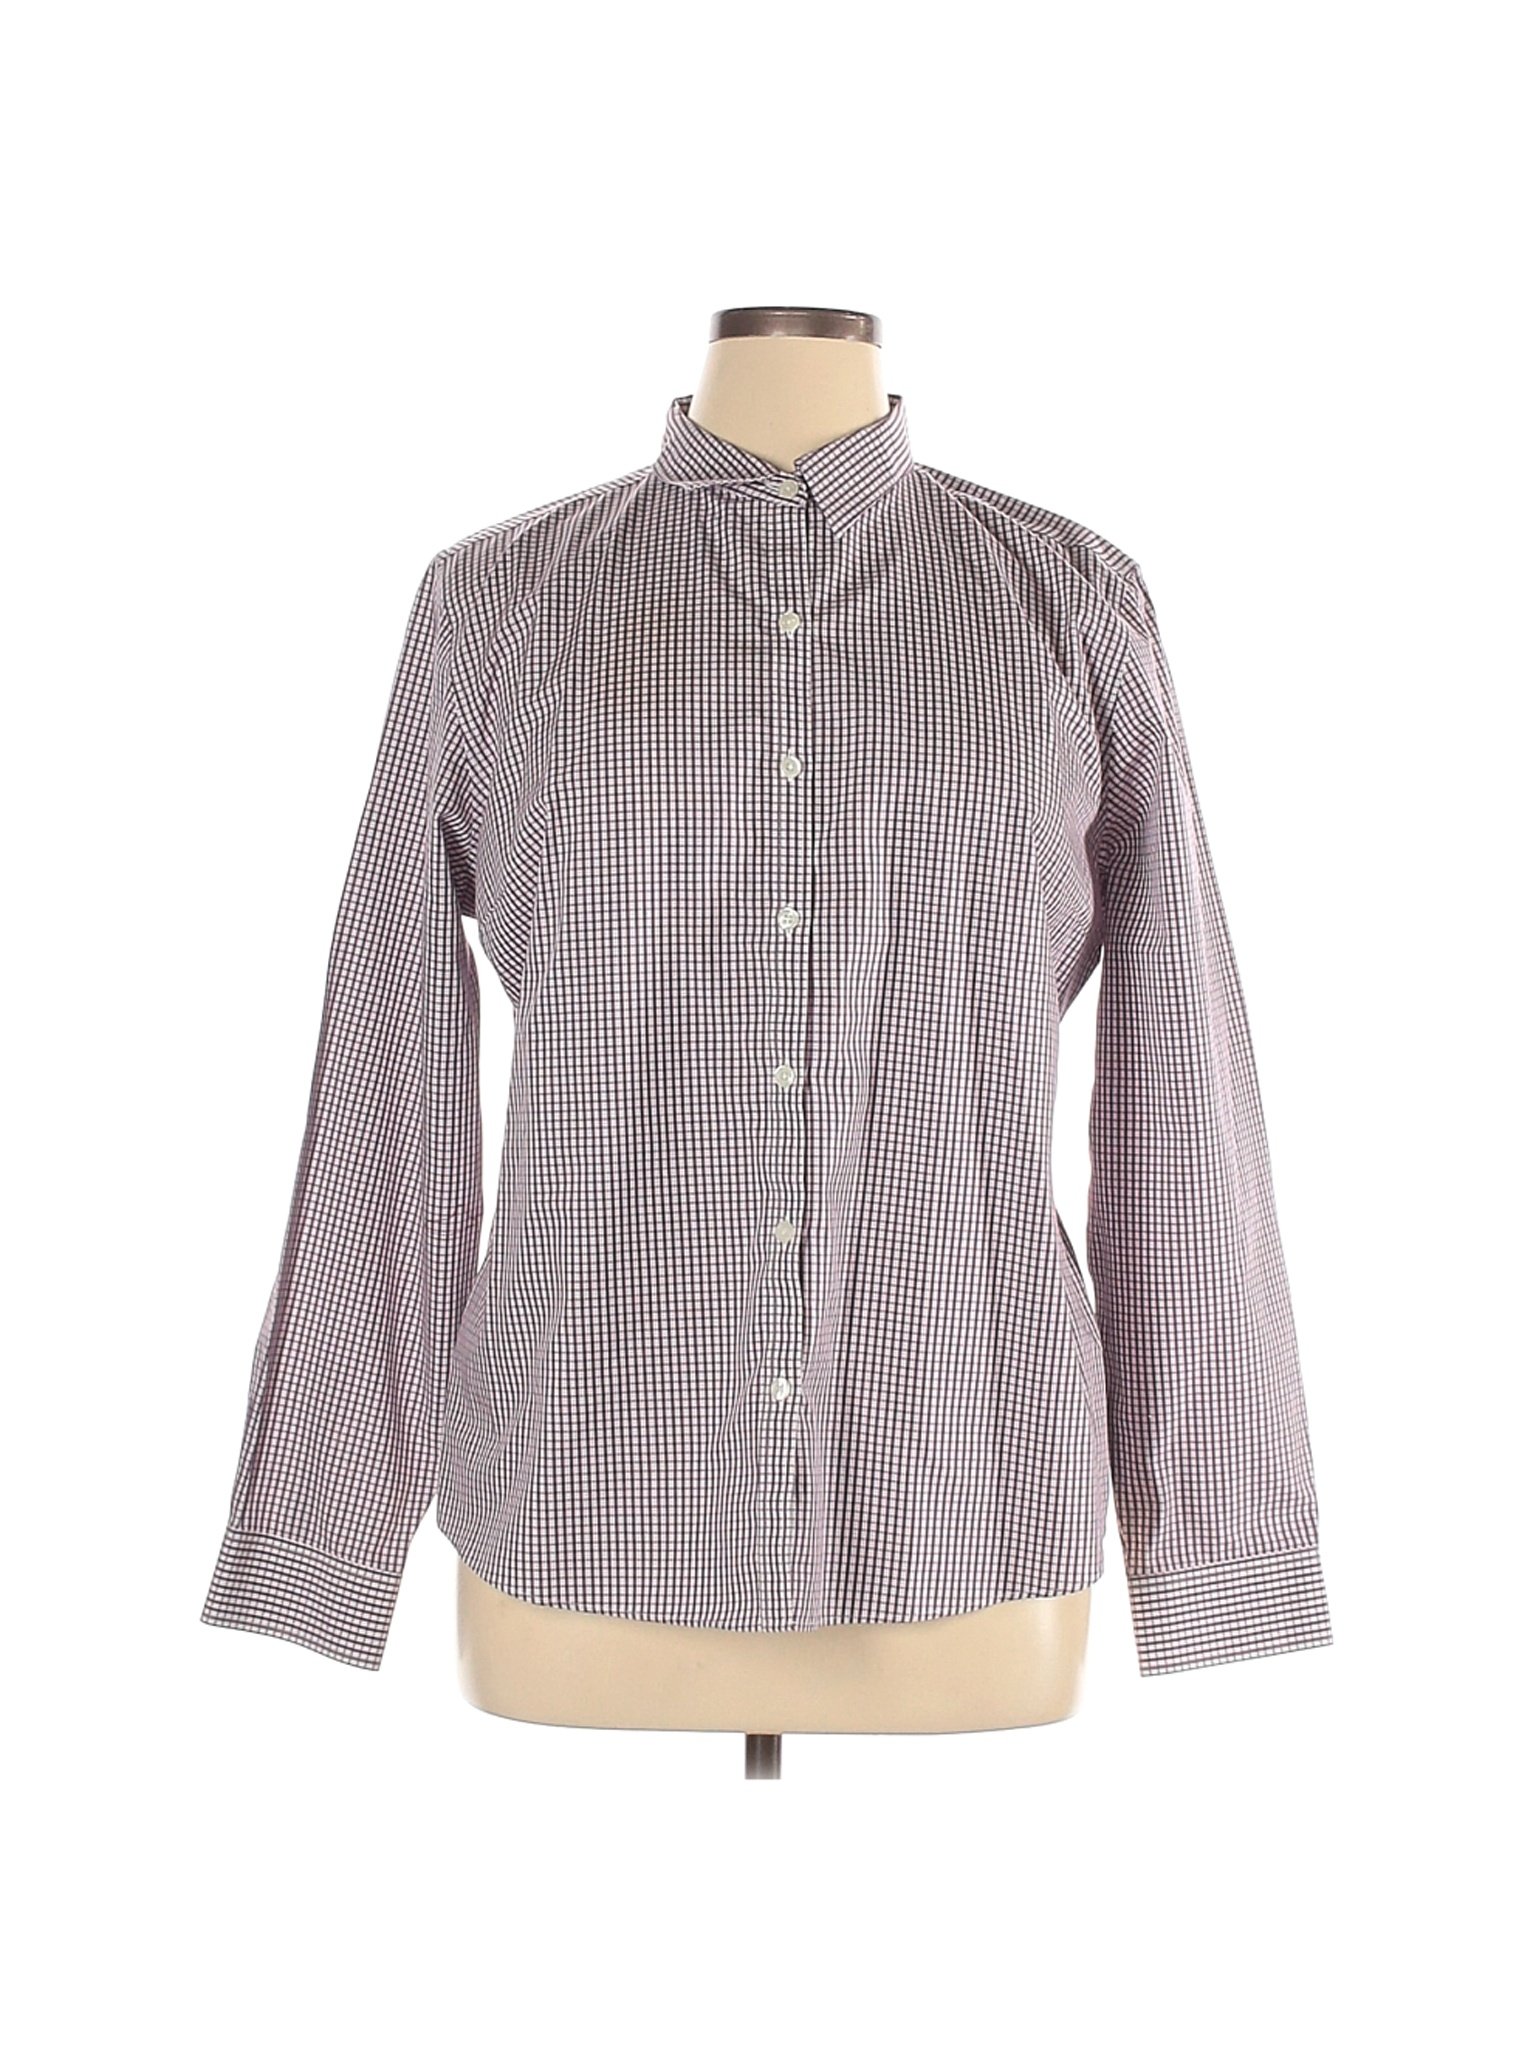 L.L.Bean Women Purple Long Sleeve Button-Down Shirt XL | eBay